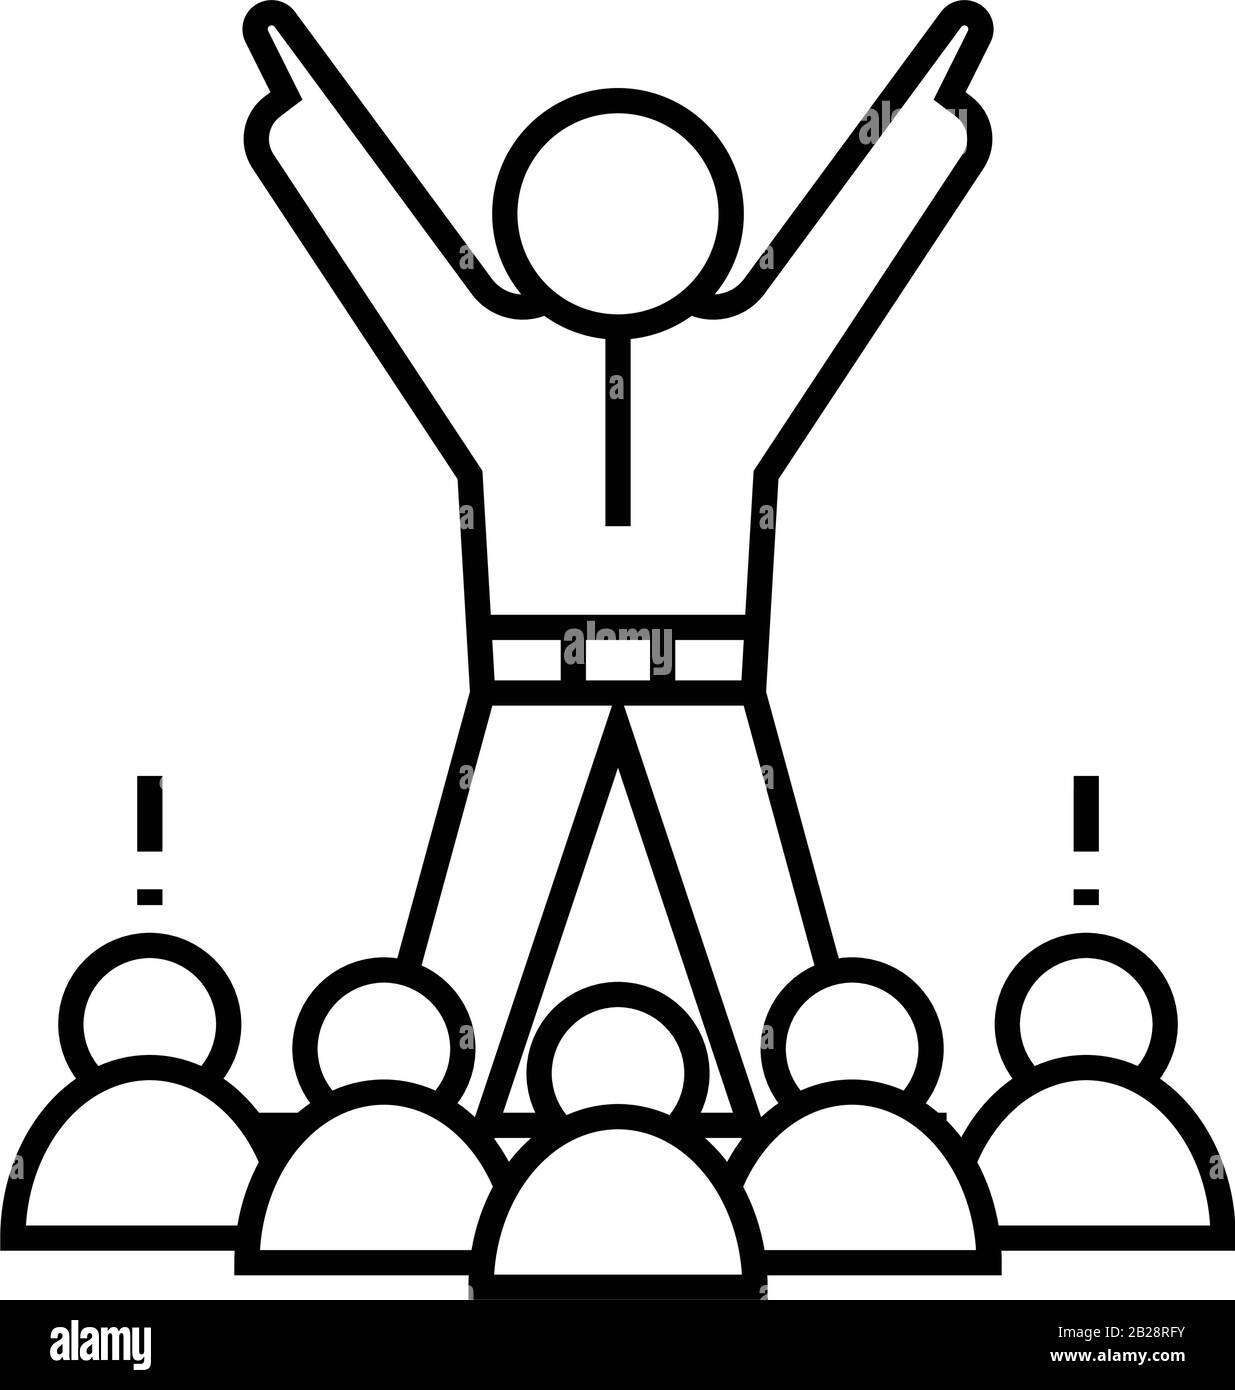 Rising leader line icon, concept sign, outline vector illustration